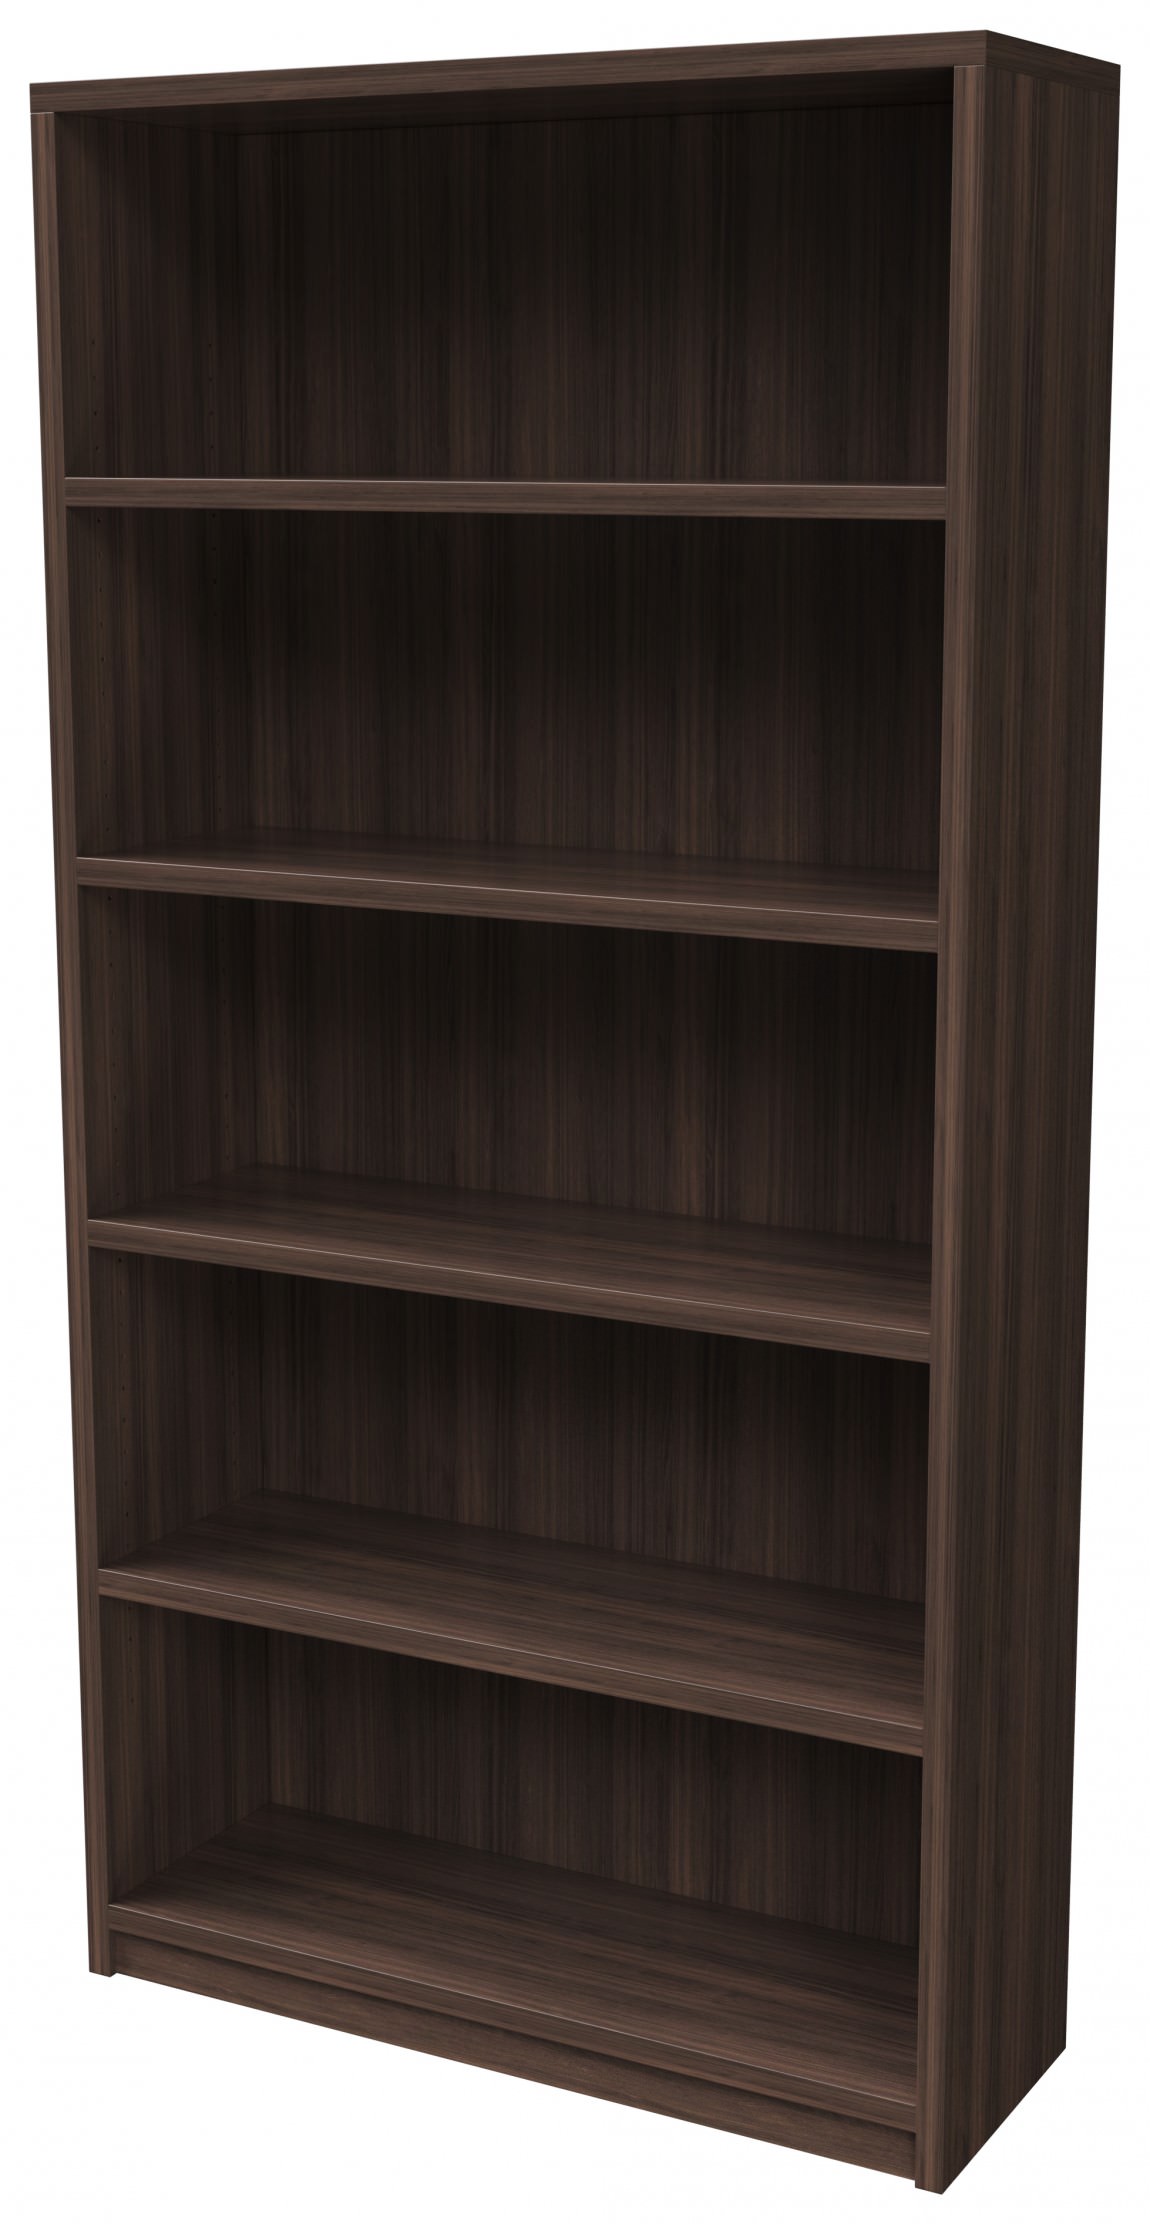 https://madisonliquidators.com/images/p/1150/21852-5-shelf-bookcase-72-tall-1.jpg